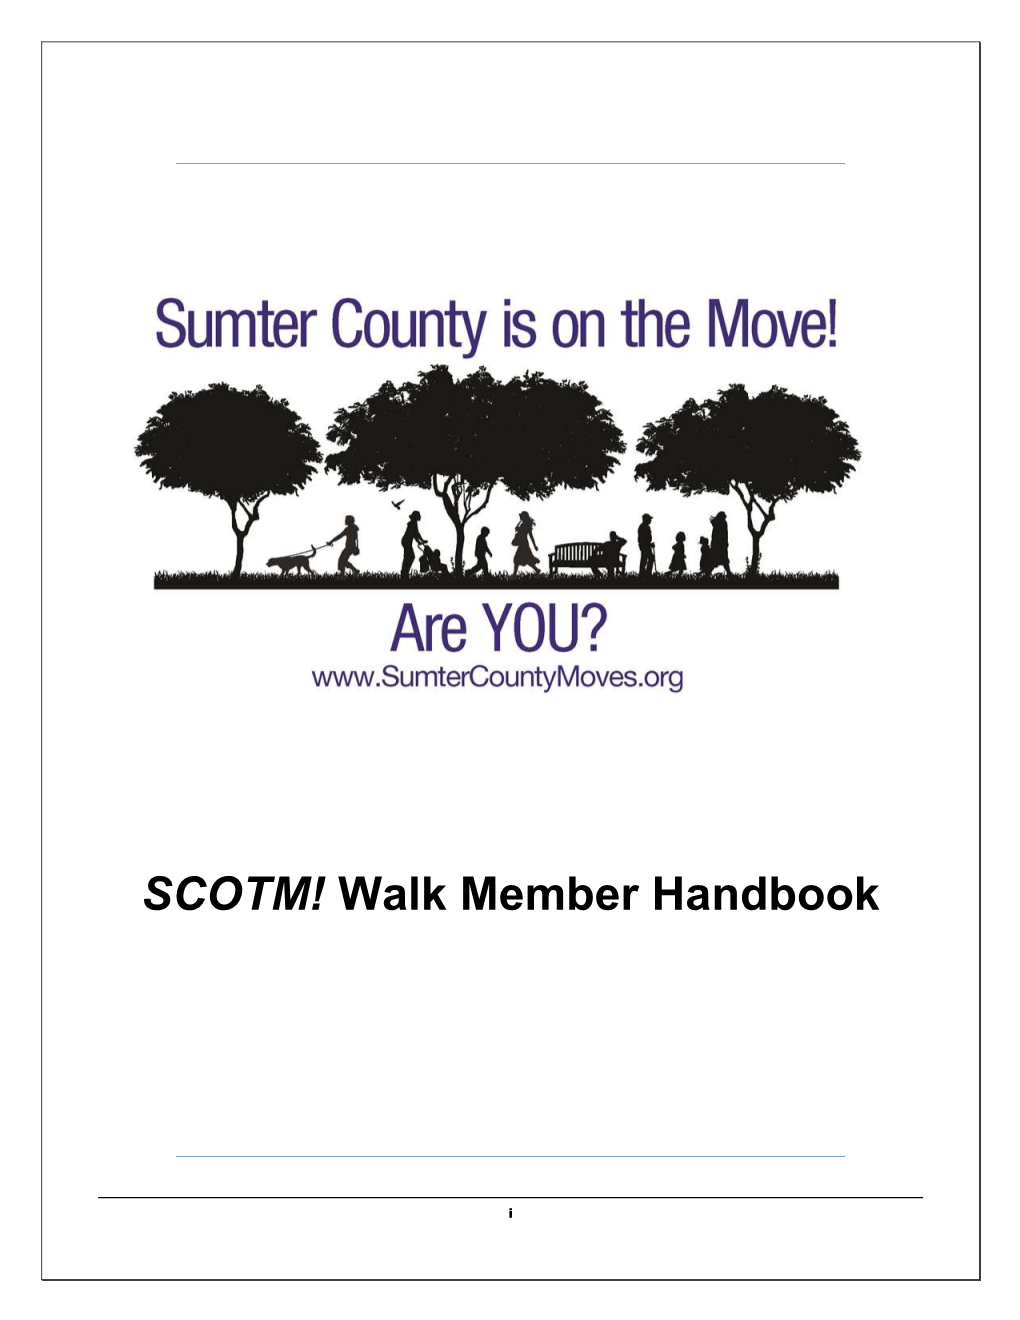 SCOTM! Walk Member Handbook